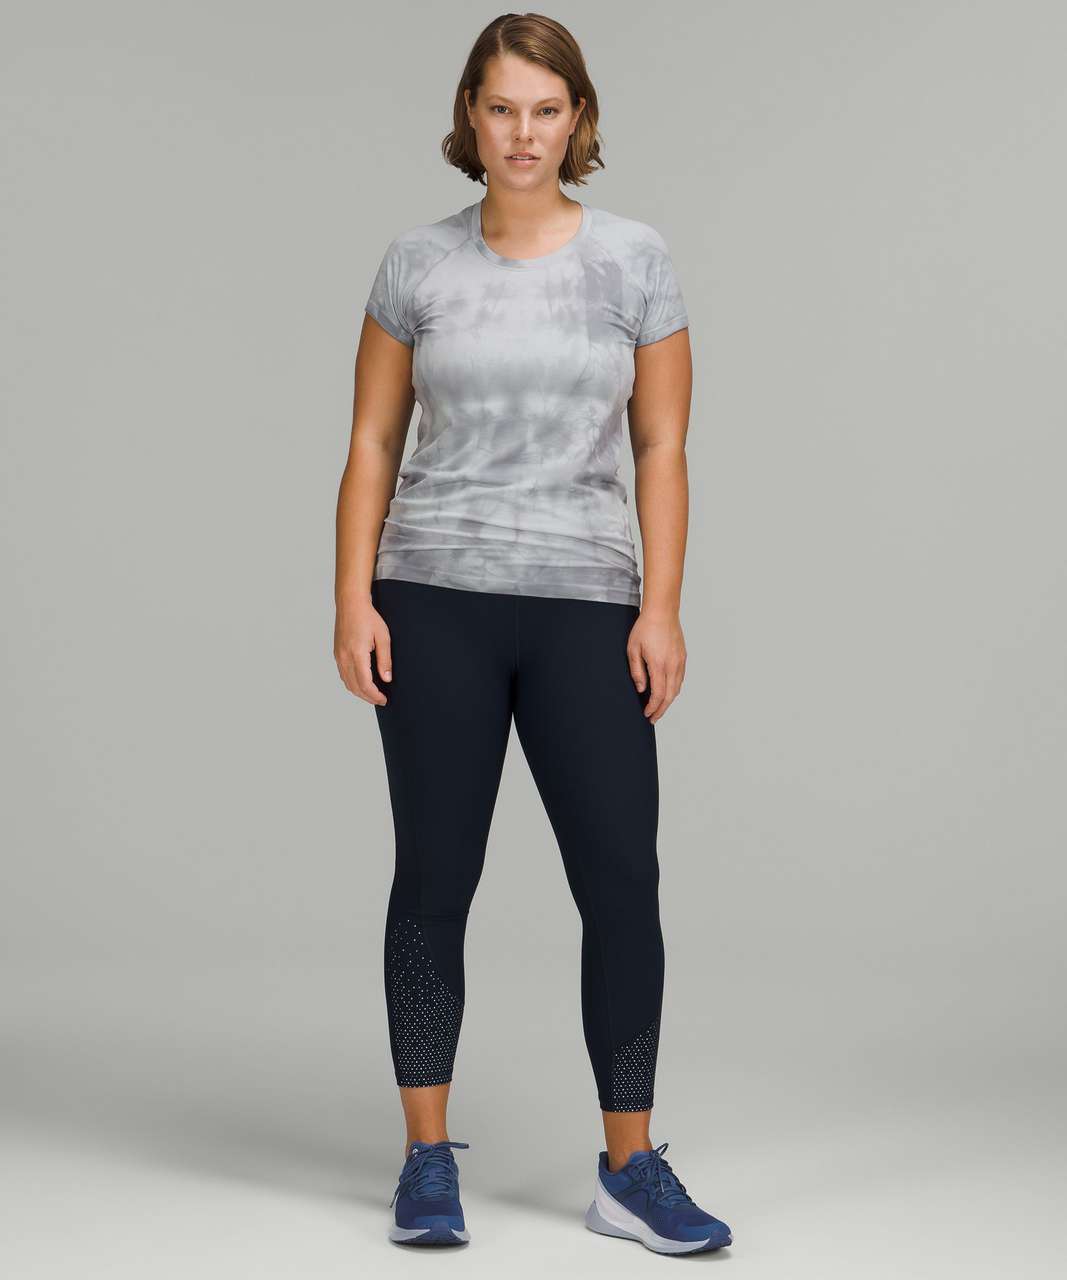 Lululemon Swiftly Tech Short Sleeve Shirt 2.0 - Marble Dye Rhino Grey